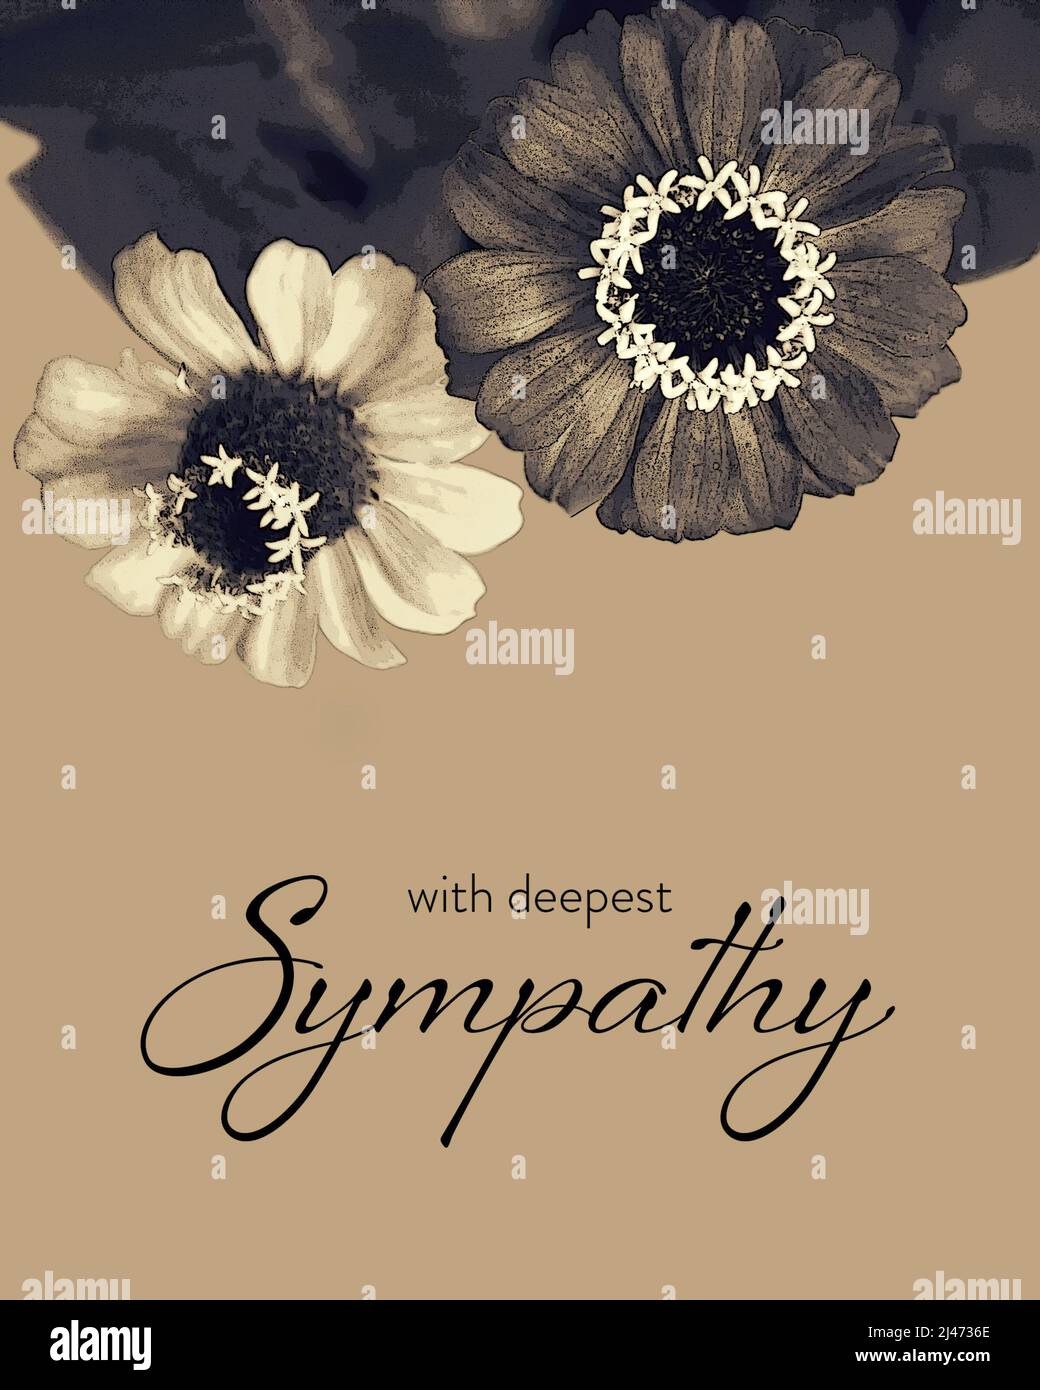 Sympathy card with zinnia flowers illustration Stock Photo